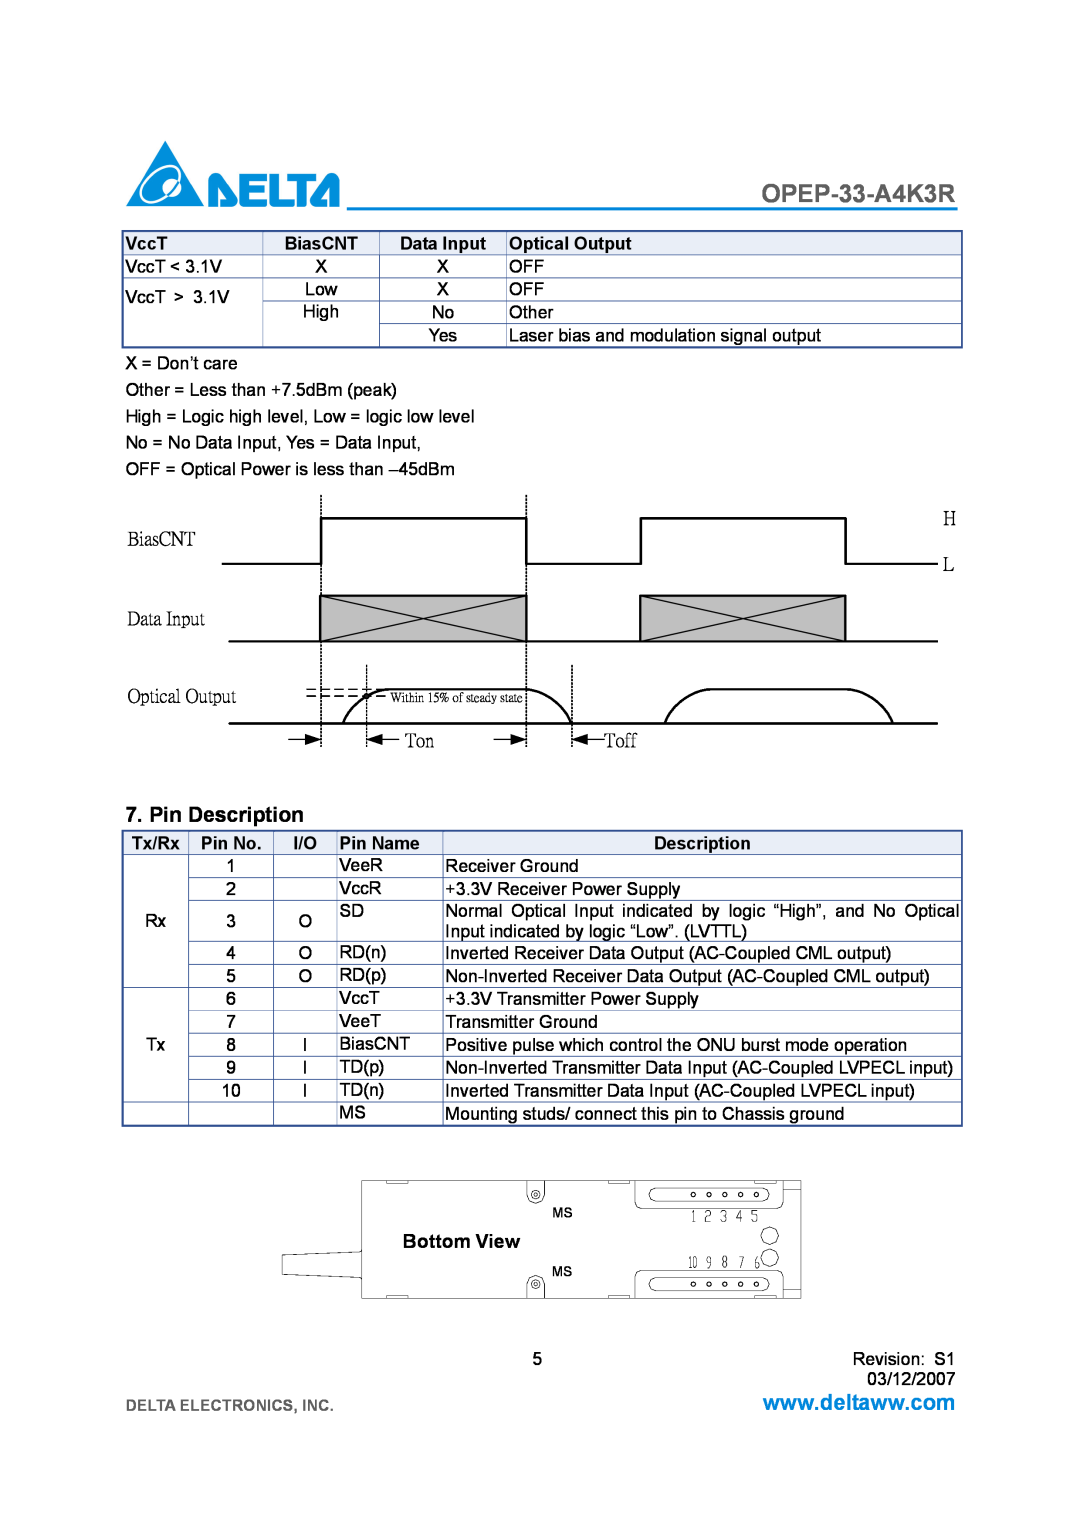 Delta Electronics OPEP-33-A4K3R manual Pin Description, Bottom View, BiasCNT Data Input, Optical Output 